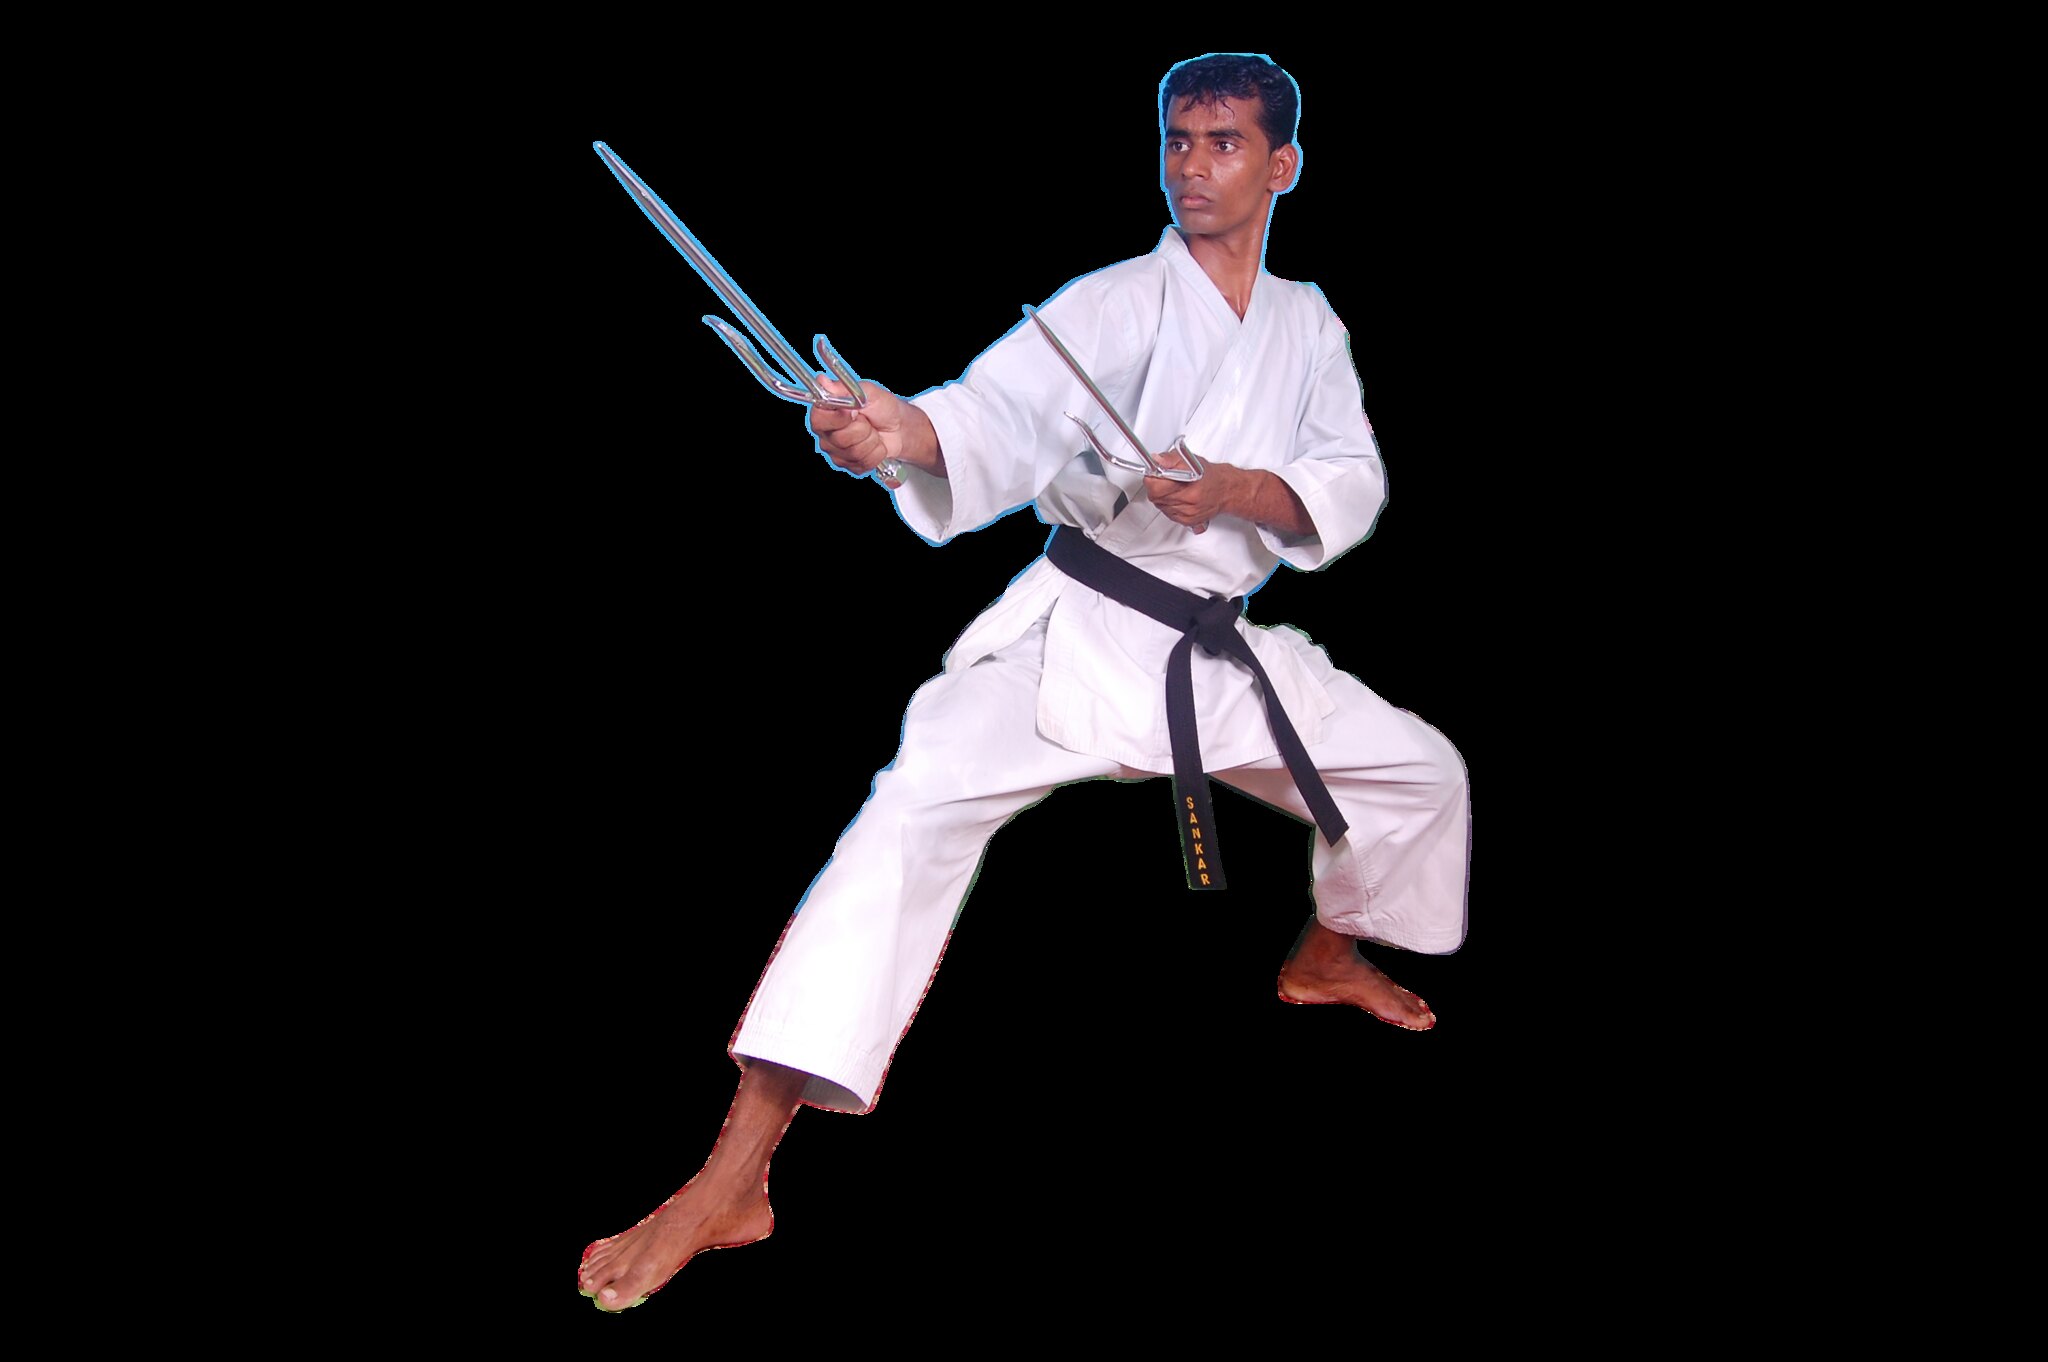 karate image: karate photo